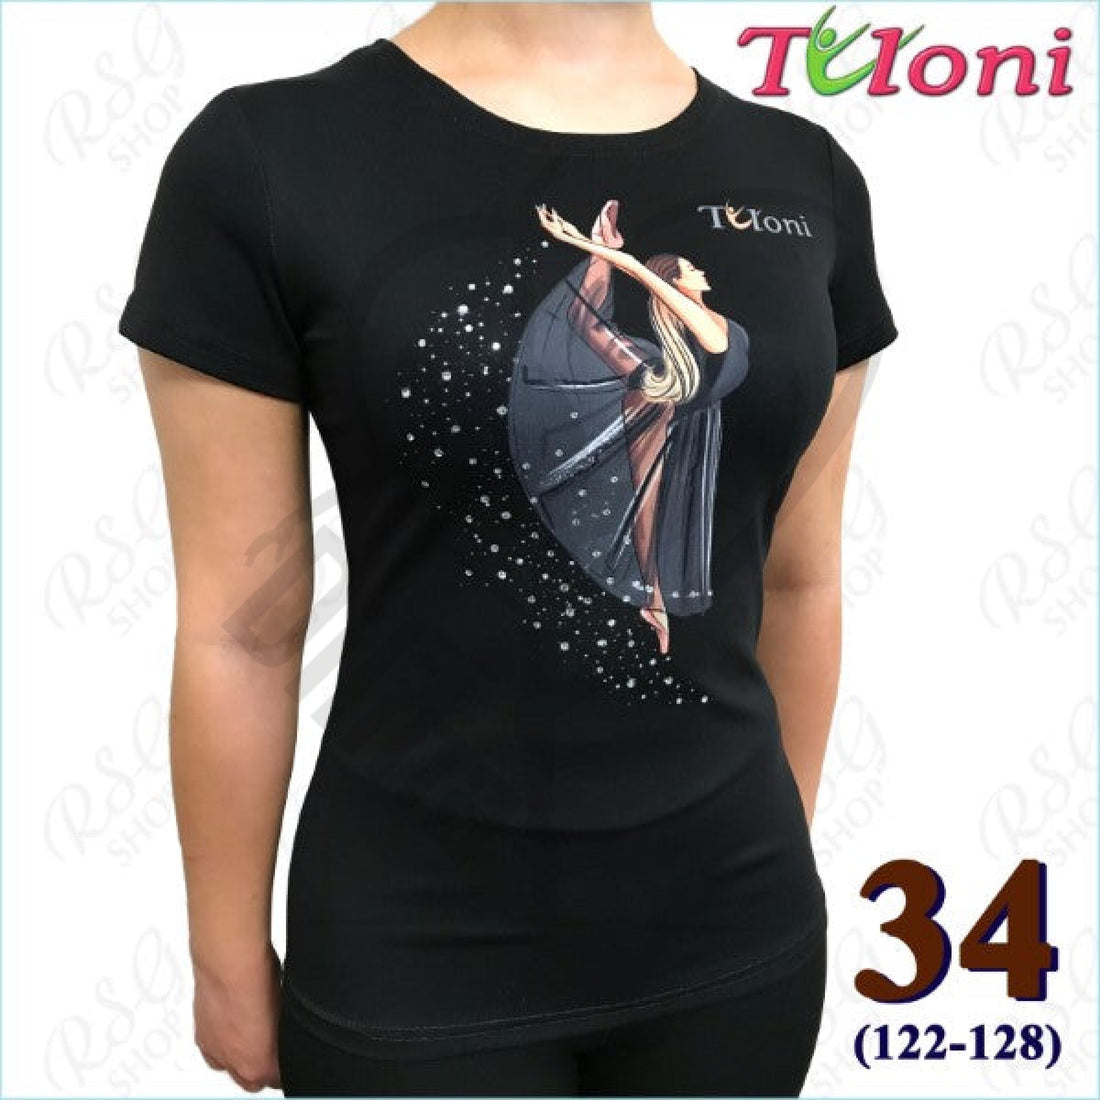 Tuloni Black T-Shirt Mod. Ballet 34 (122-128) T Shirts & Tops